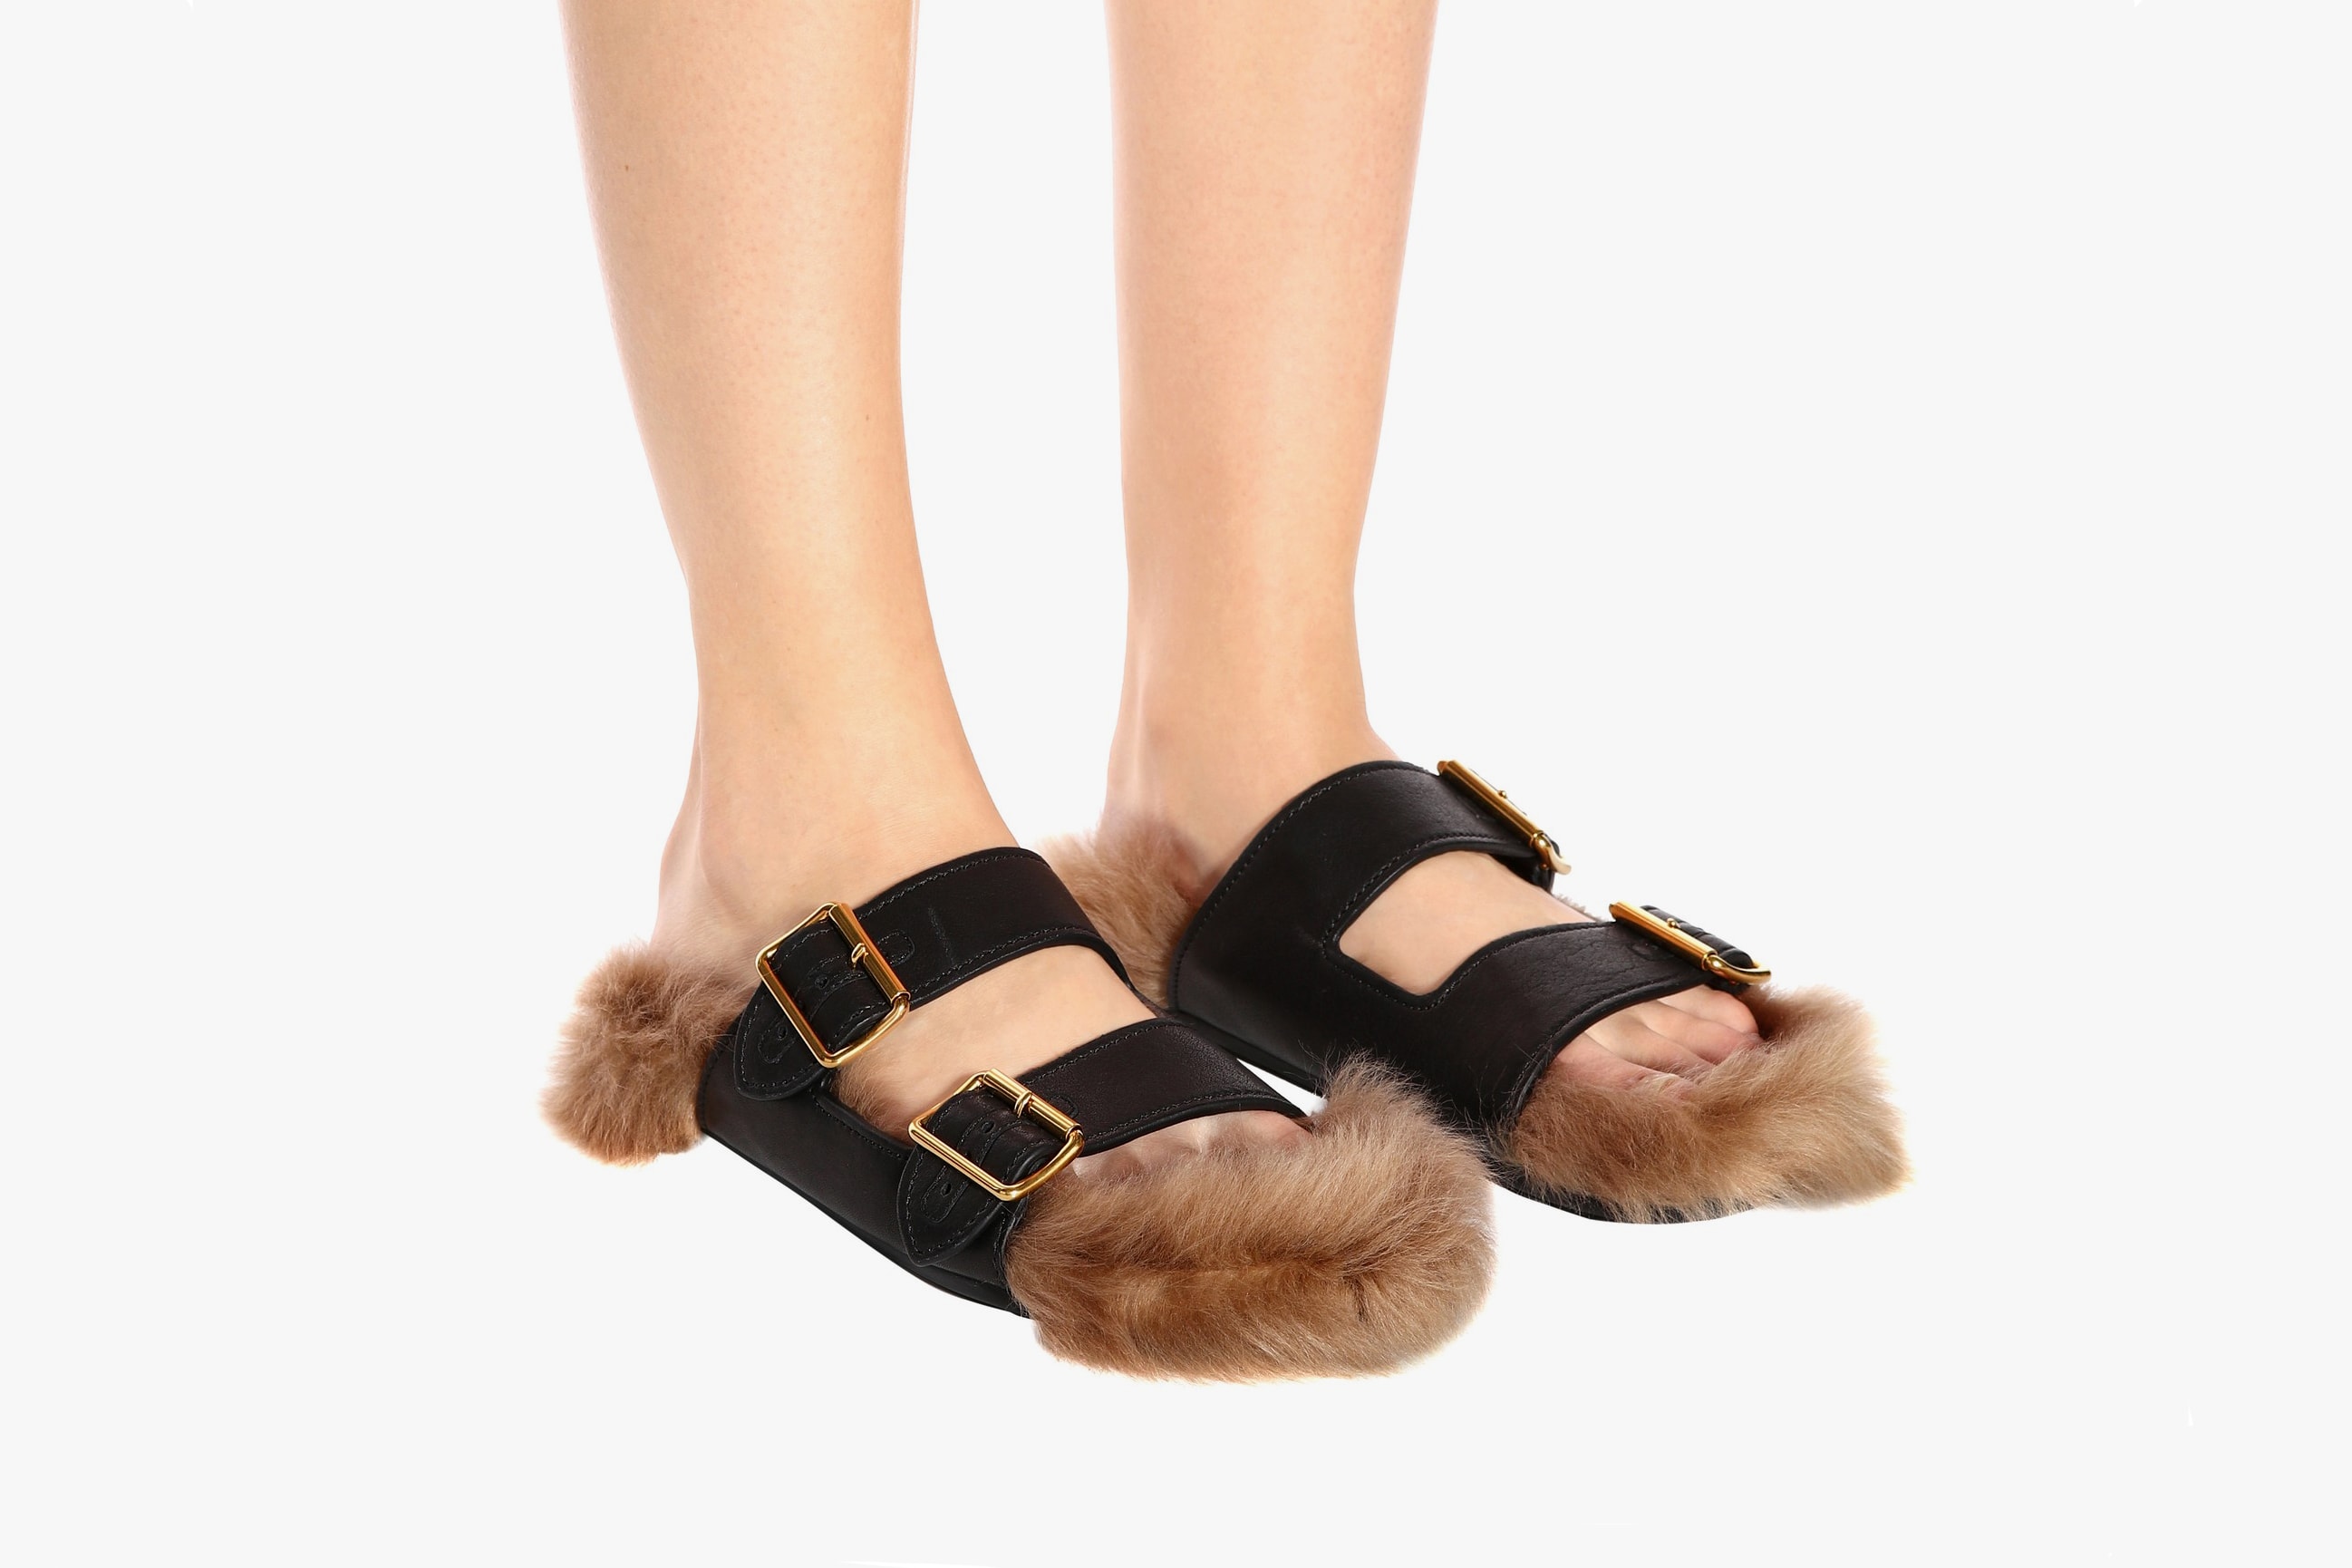 Where to Buy Prada's Fur-lined Leather Sandals Miuccia Prada Shoes Birkenstock Summer Fall